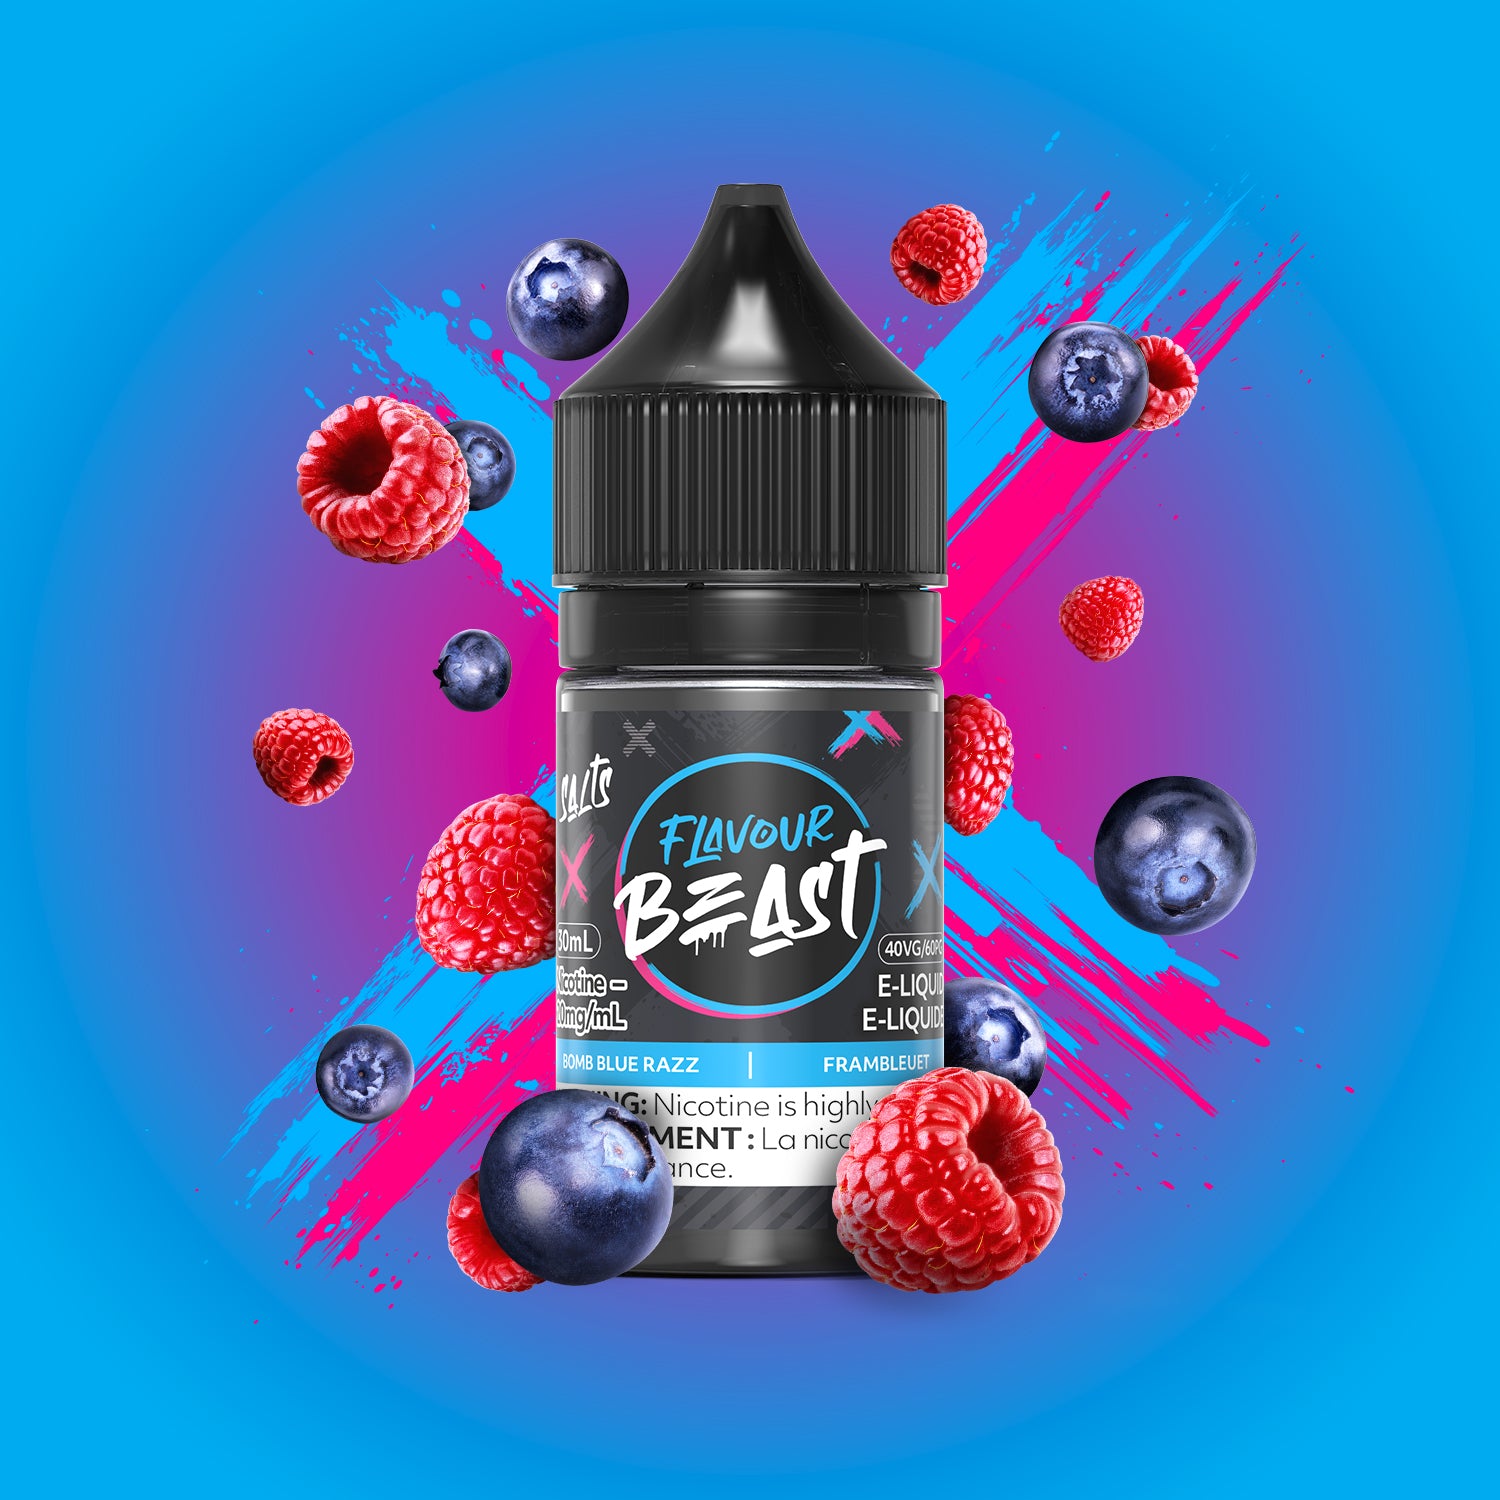 Bomb Blue Razz - Flavour Beast E-Liquid - 30ml